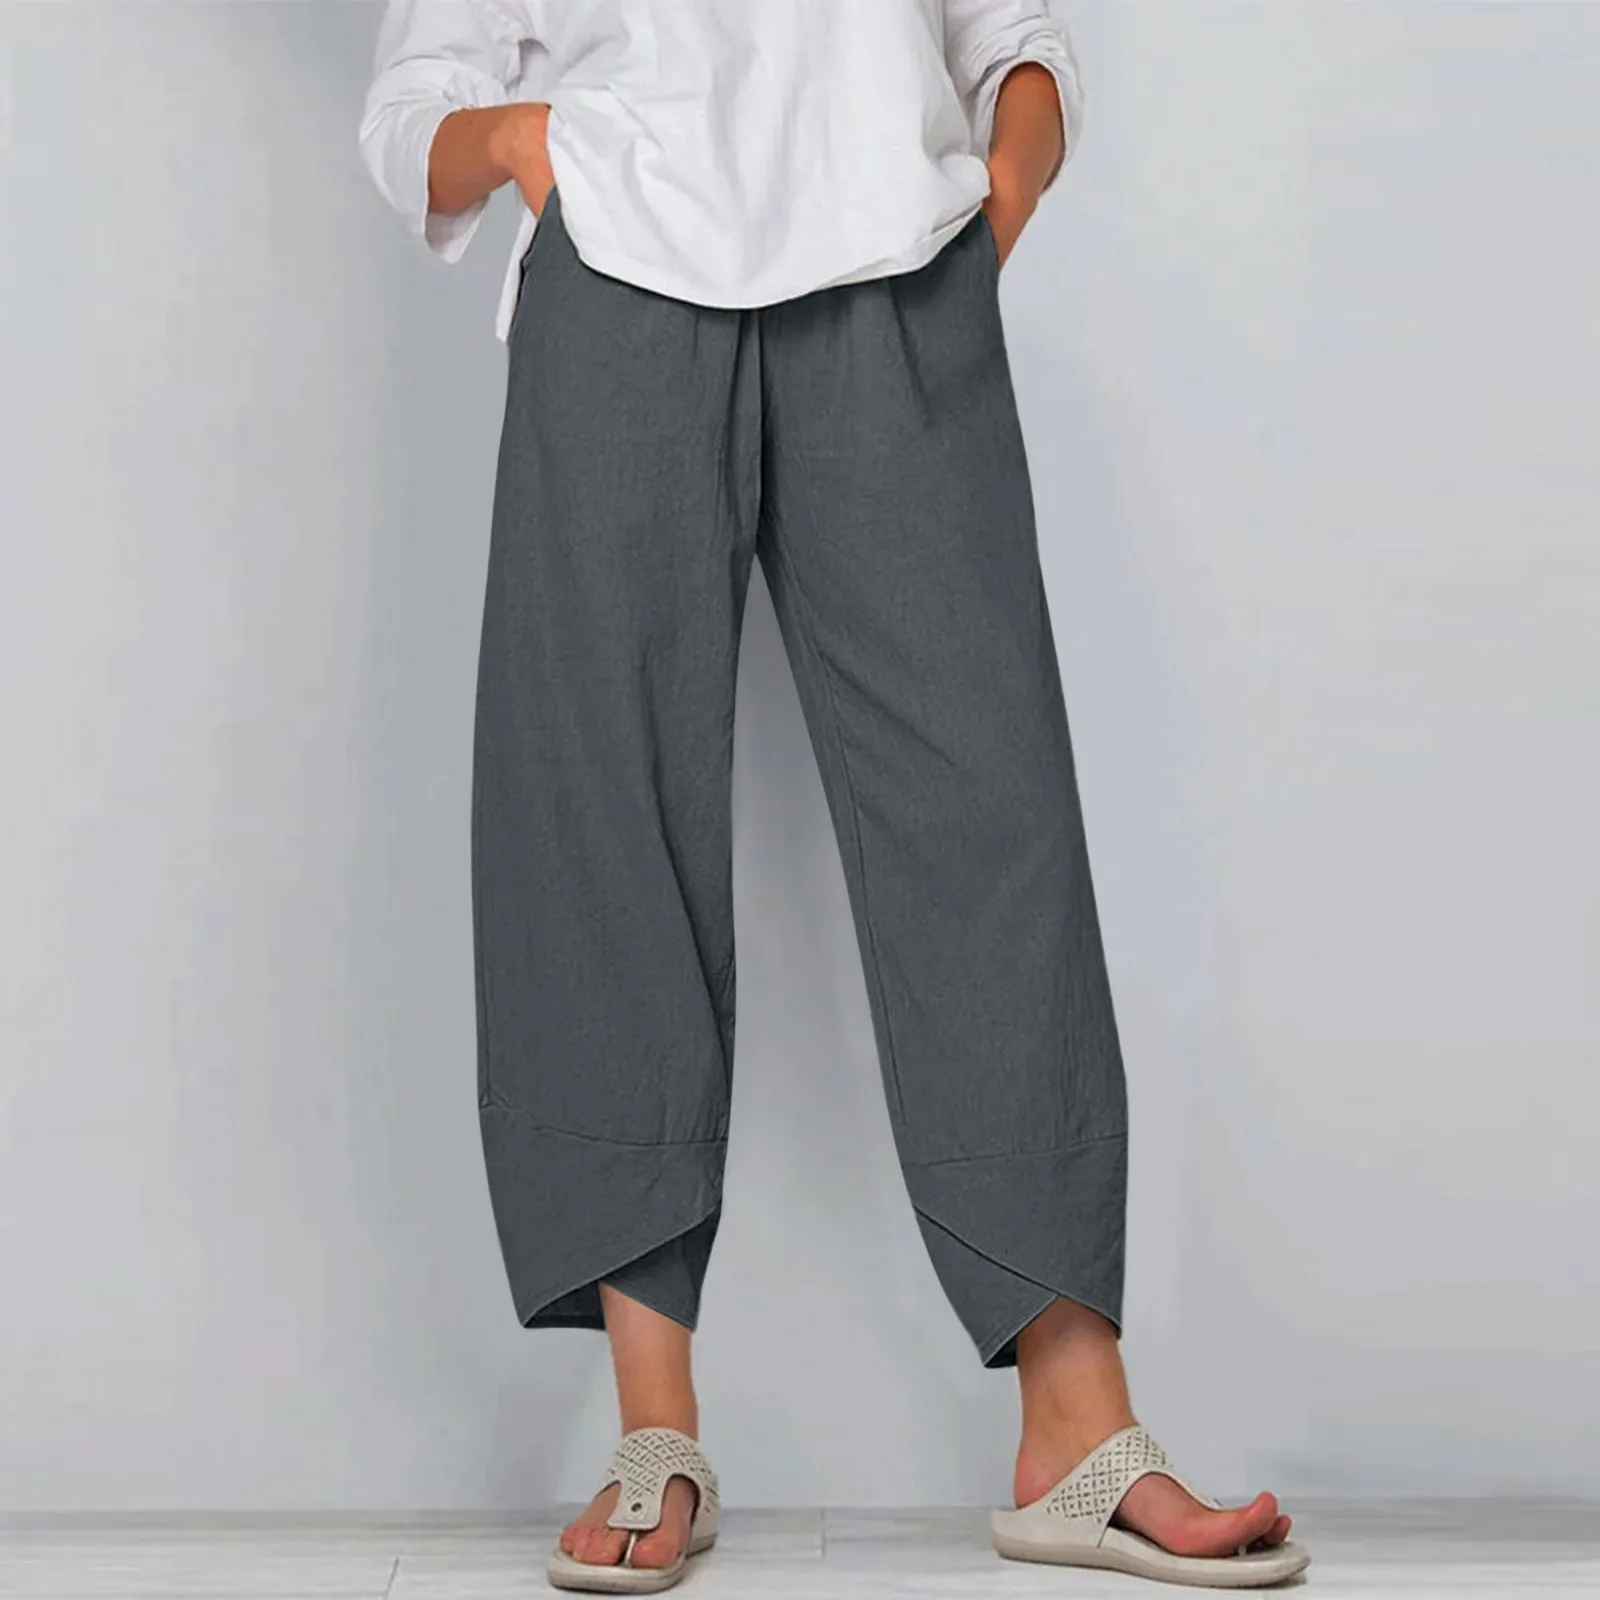 

Women Pants Pockets Solid Color Elastic Waist Casual Loose Harem Pants Cotton And Linen Cropped Capri Pants Summer Beach Slacks